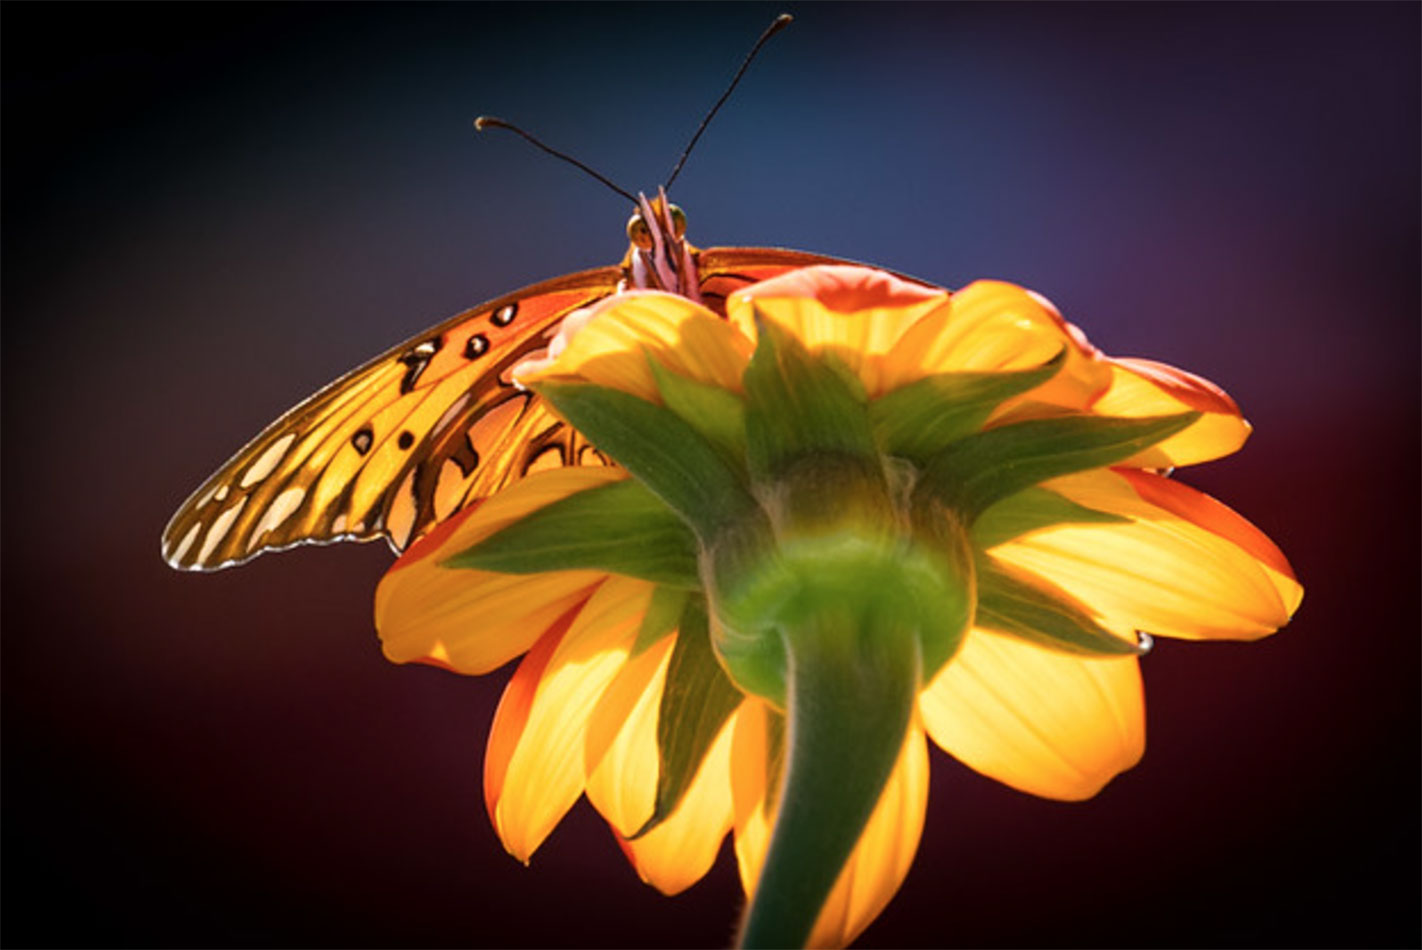 Fritillary Butterfly in San Luis Obispo, California